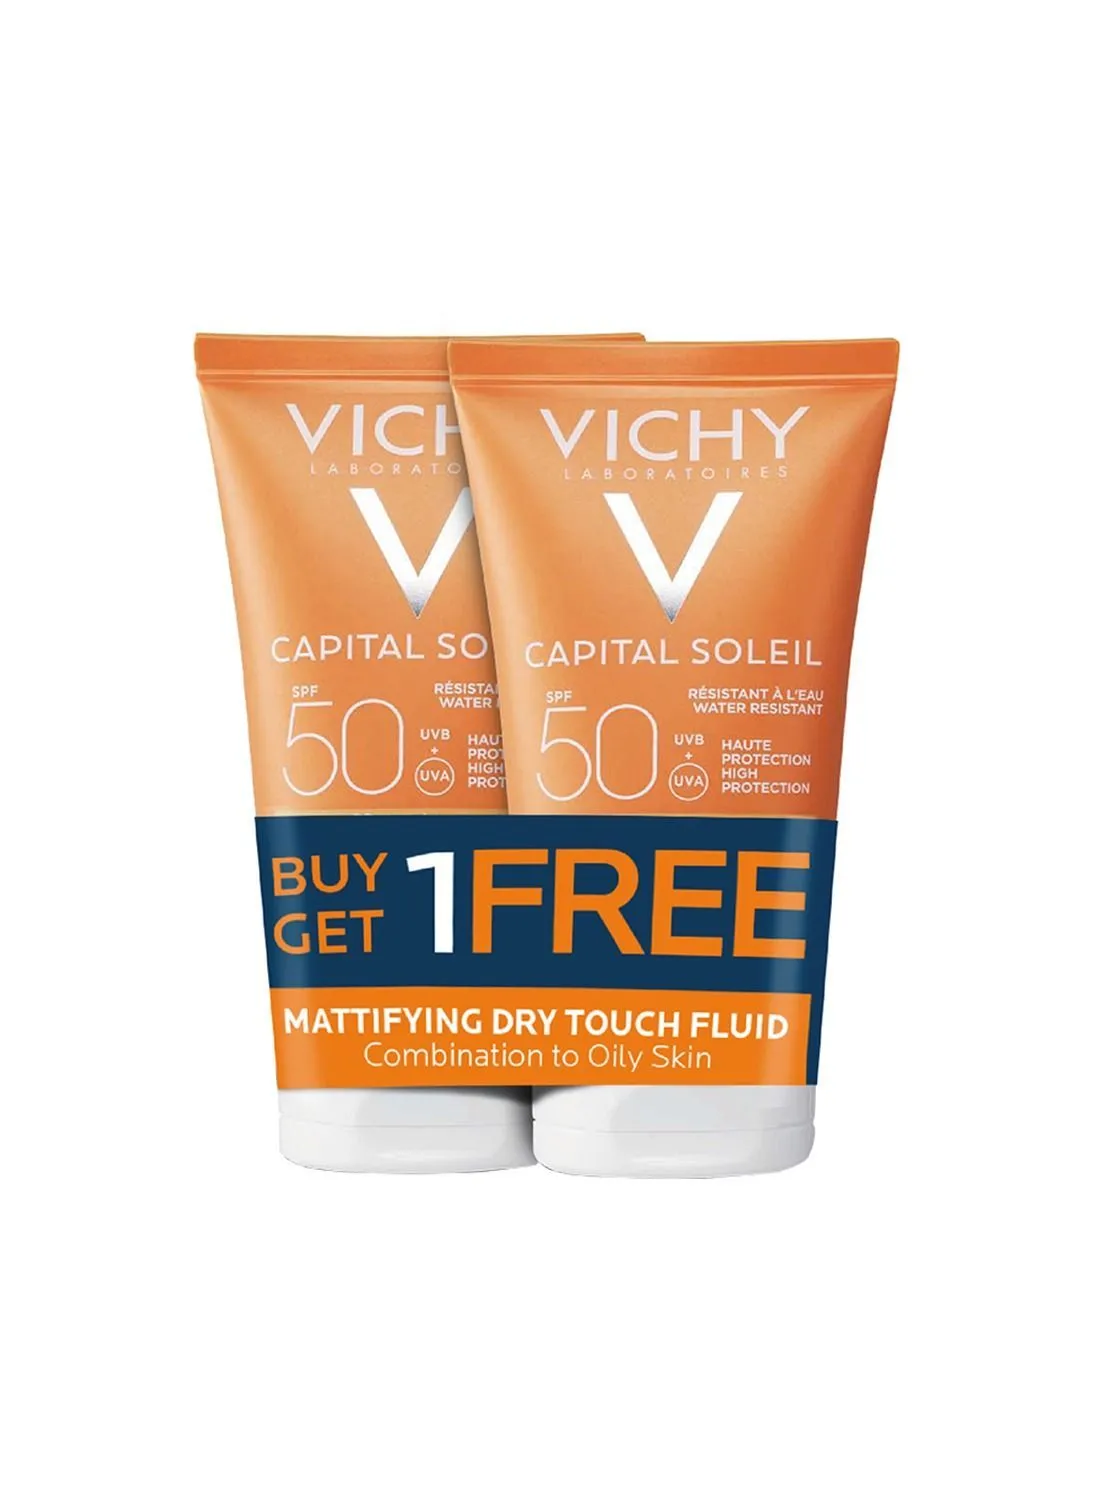 Vichy Capital Soleil Dry Touch SPF50 اشترِ 1 واحصل على 1 مجانًا من واقي الشمس للبشرة الدهنية